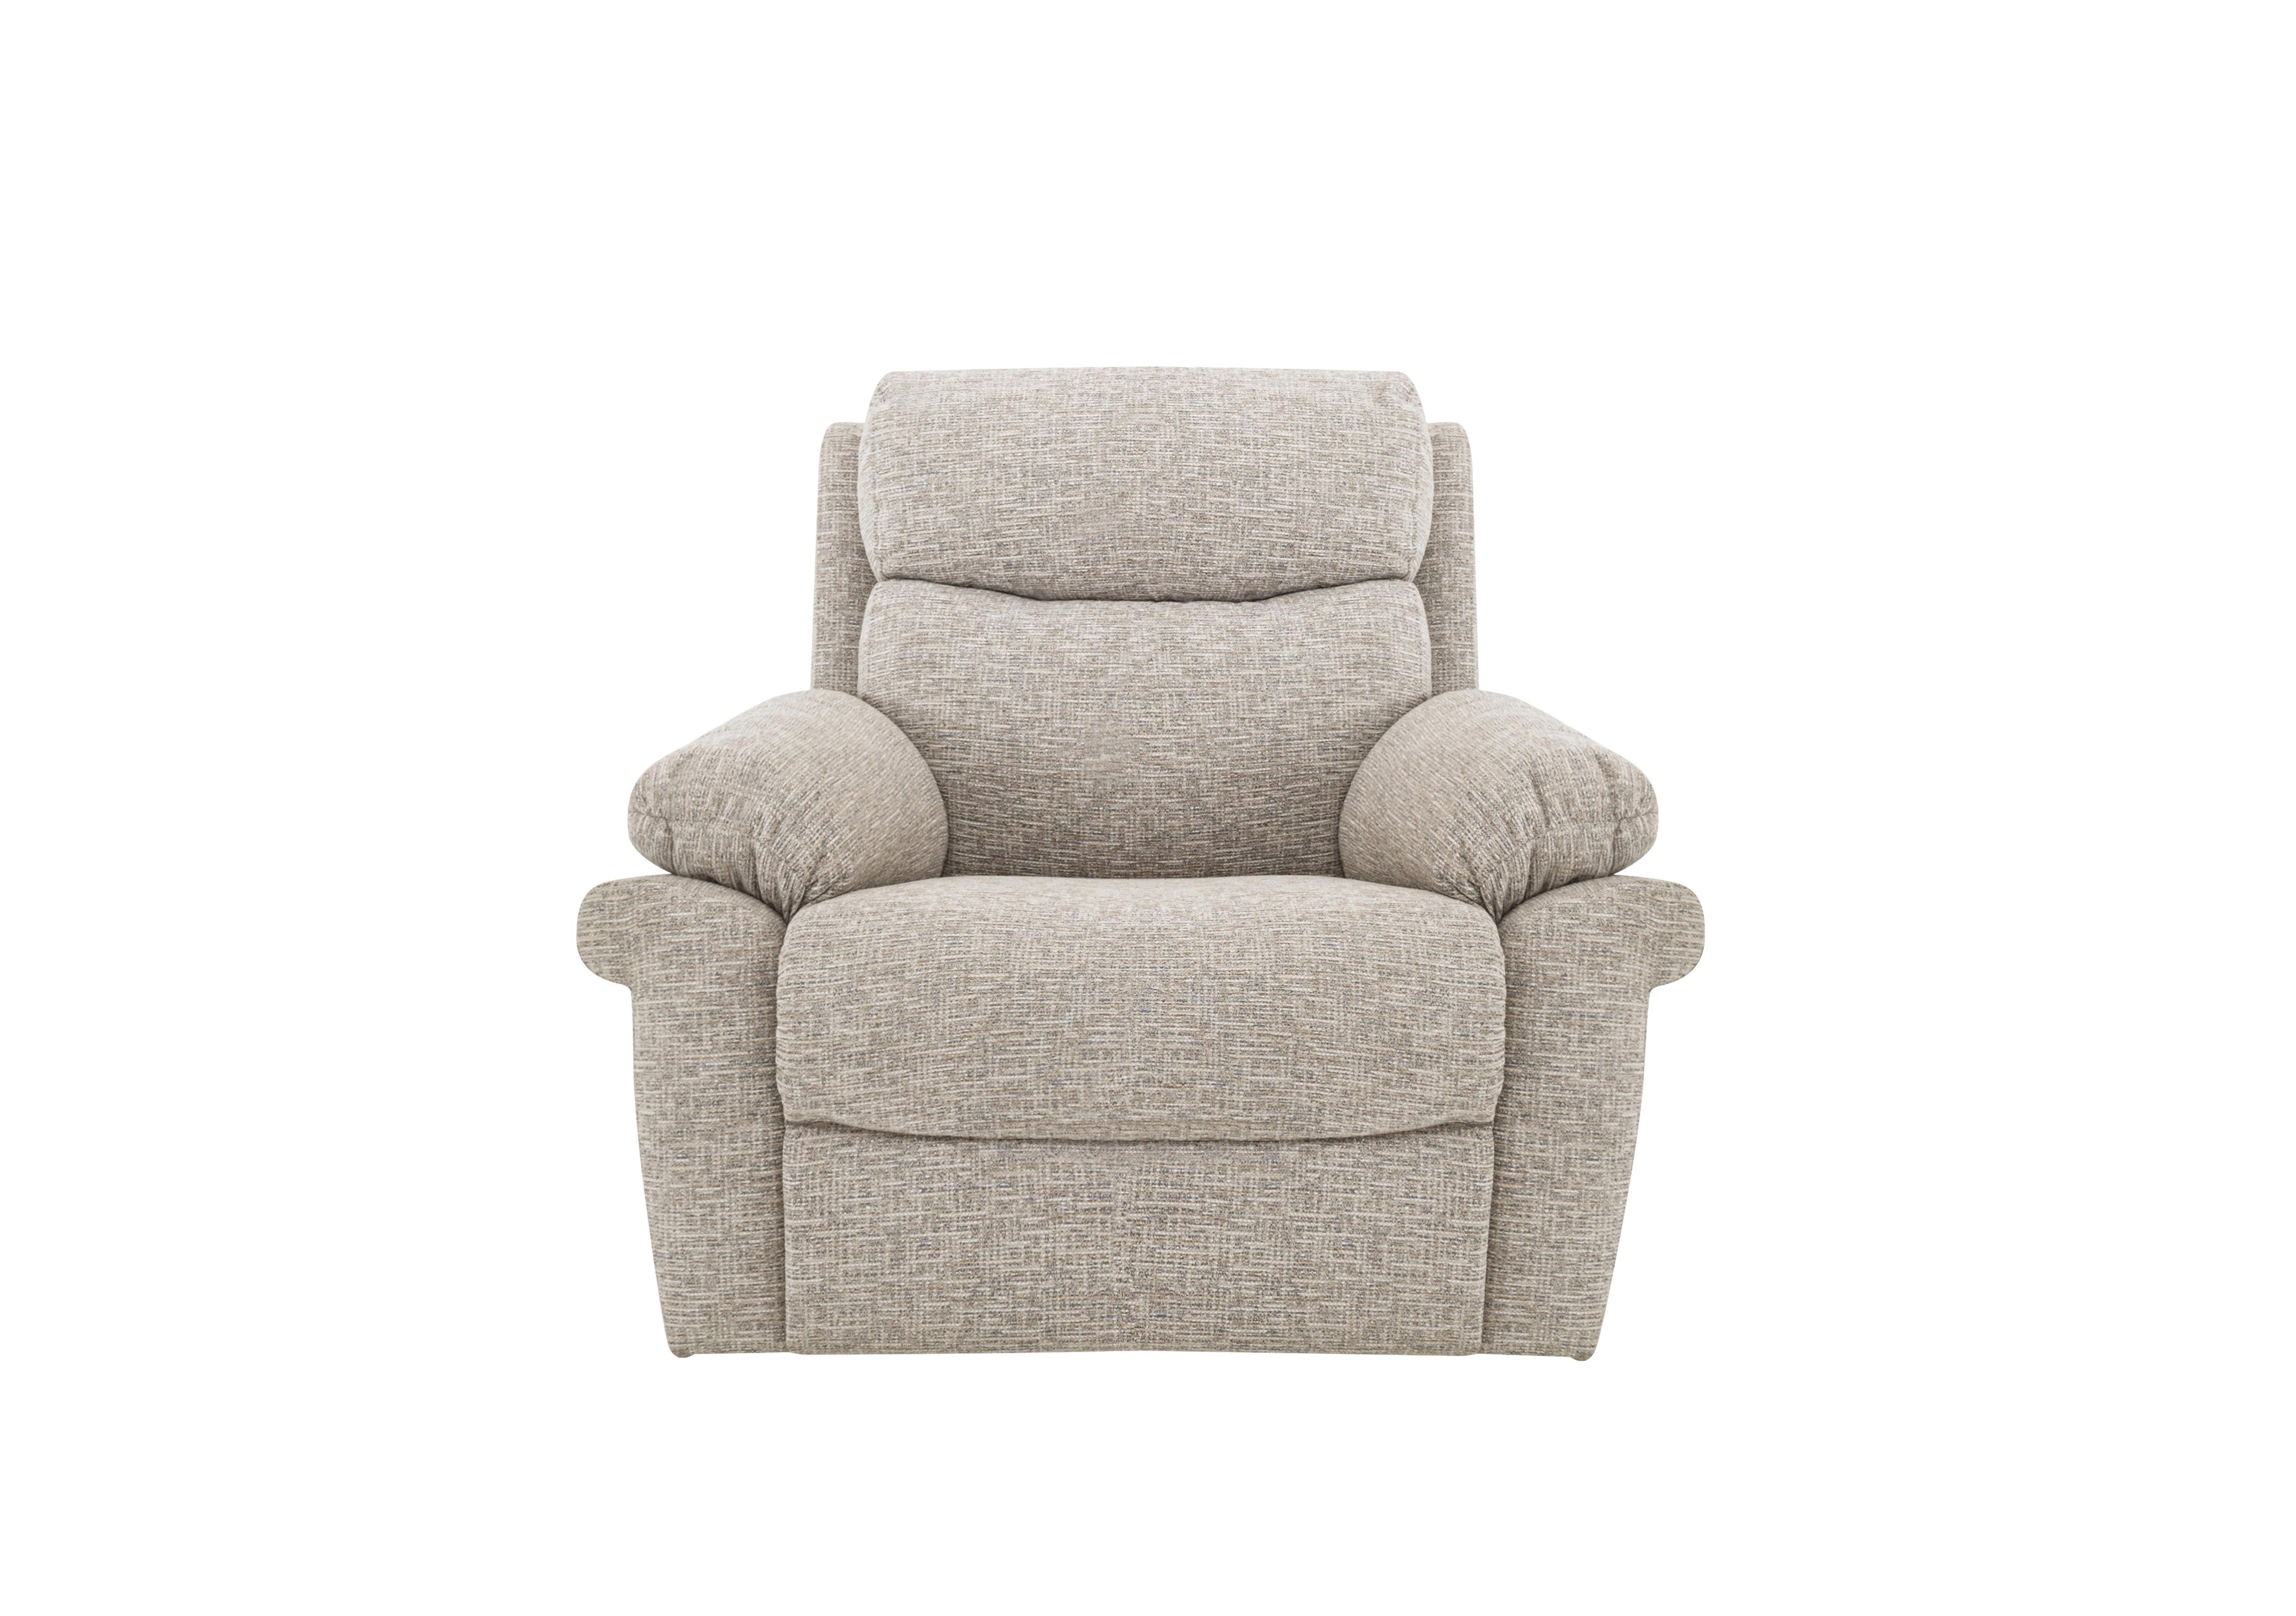 Verse Fabric Manual Recliner Armchair Comfort Story Furniture Village